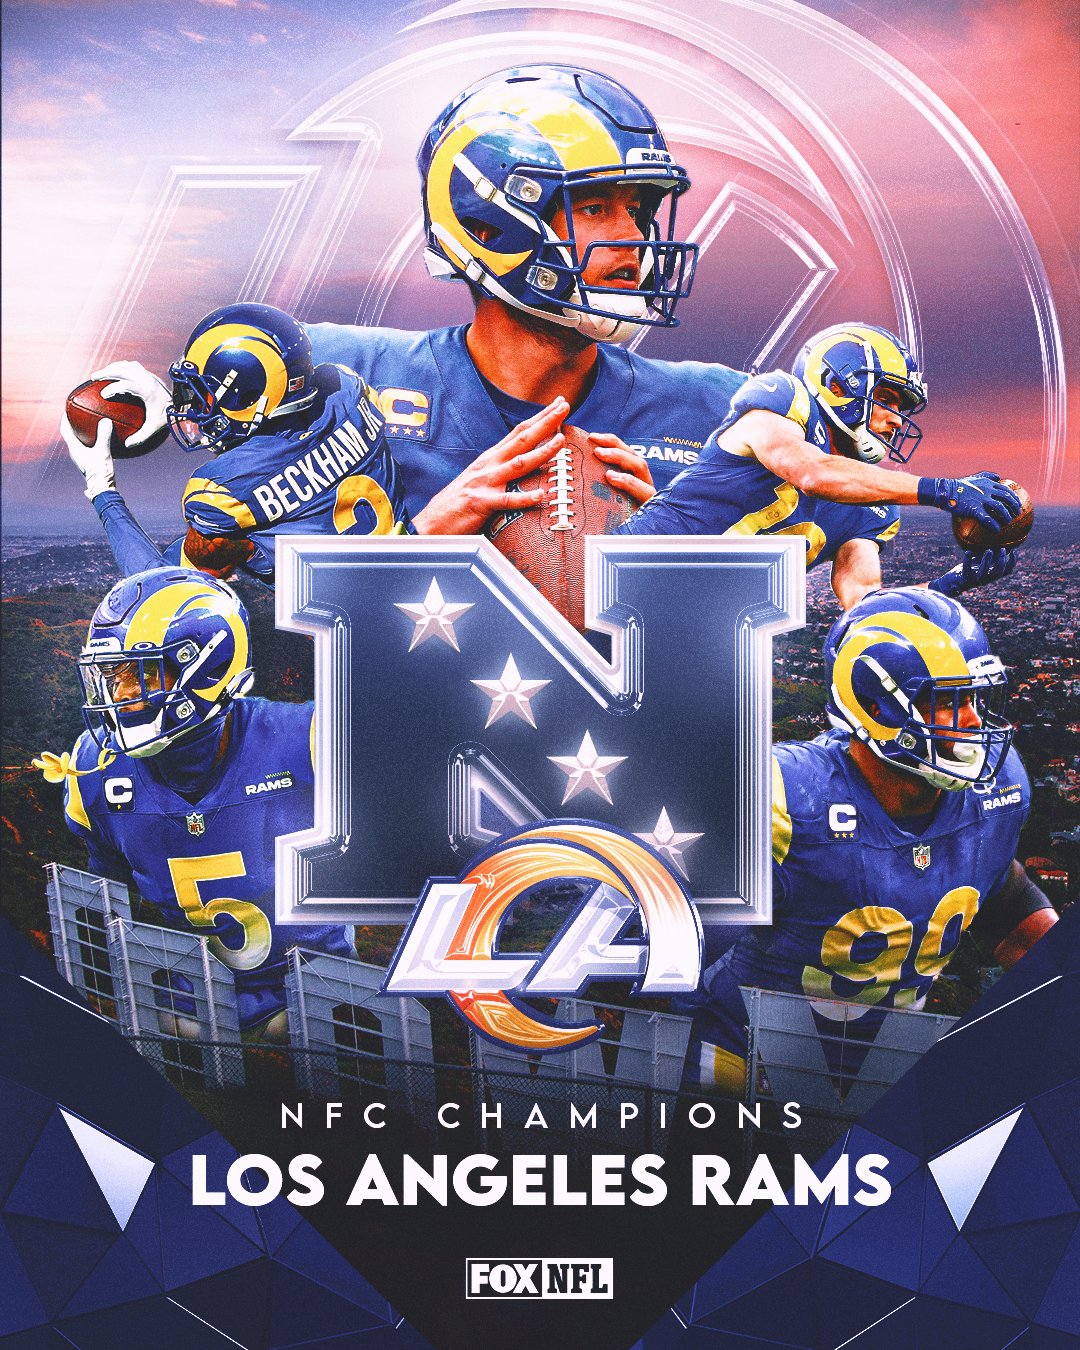 Los Angeles Rams on Twitter  Ram wallpaper, La rams, Los angeles rams